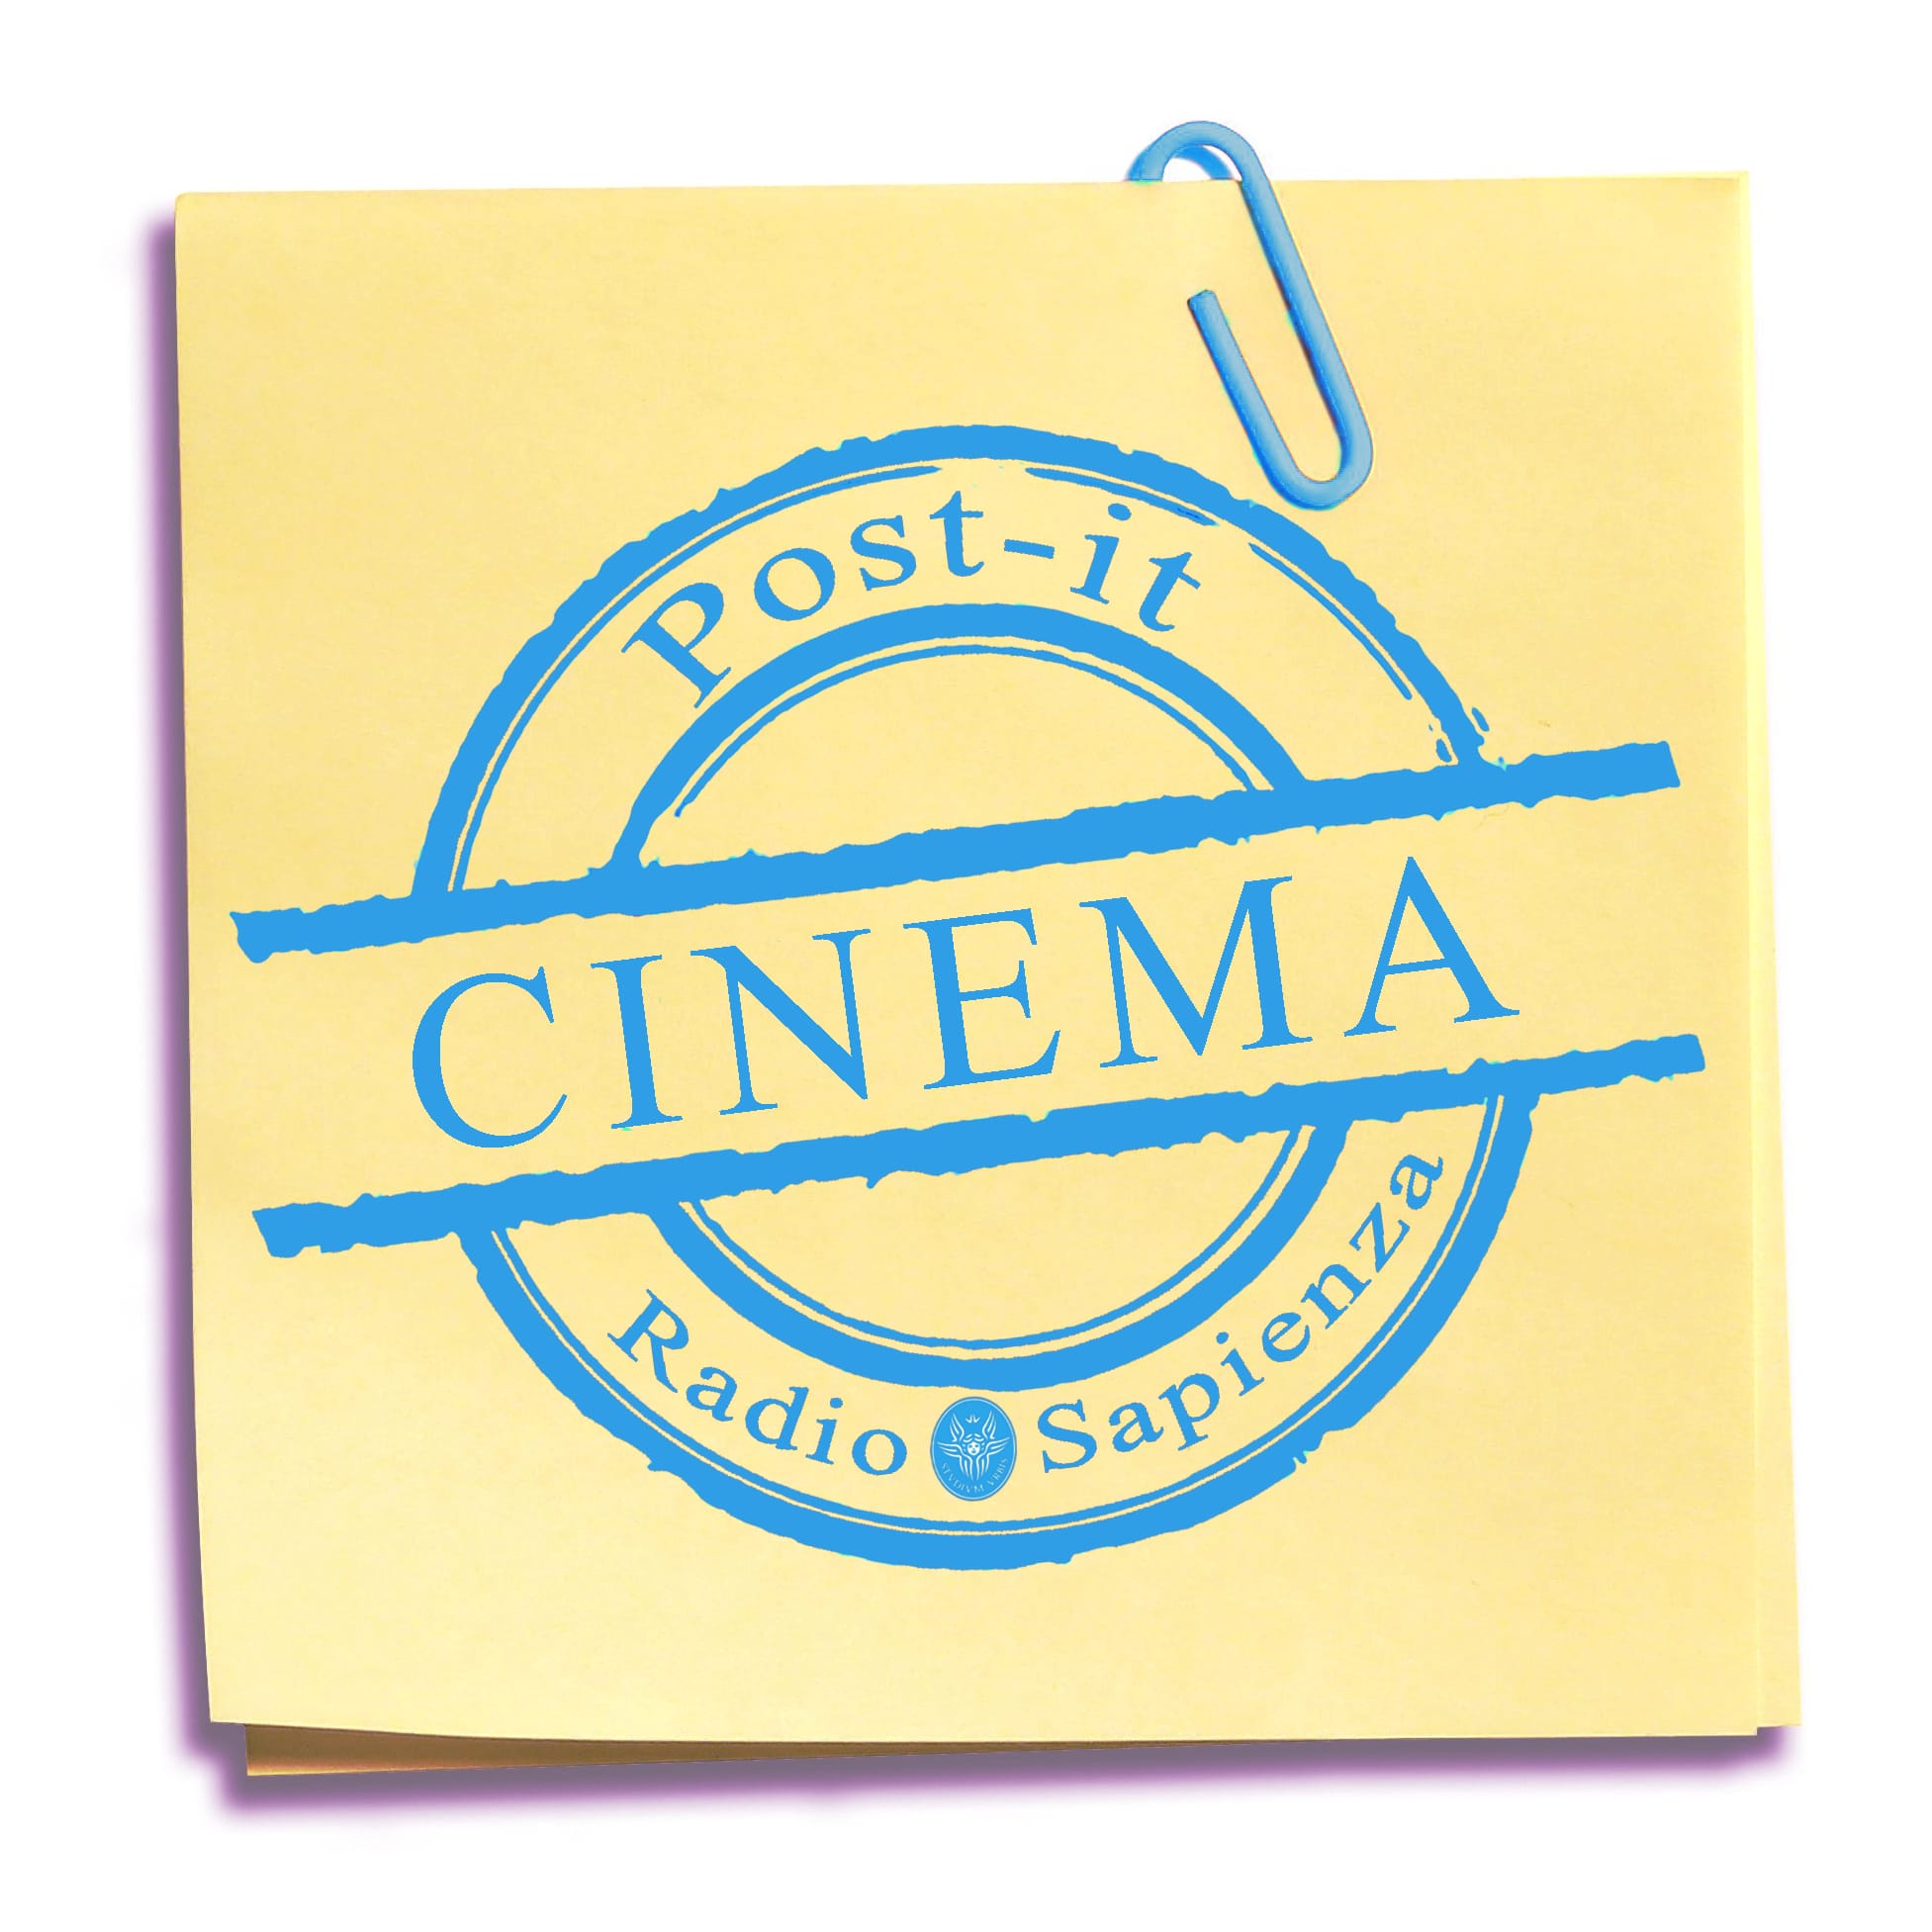 Post-it Cinema – Mercoledì 14 aprile